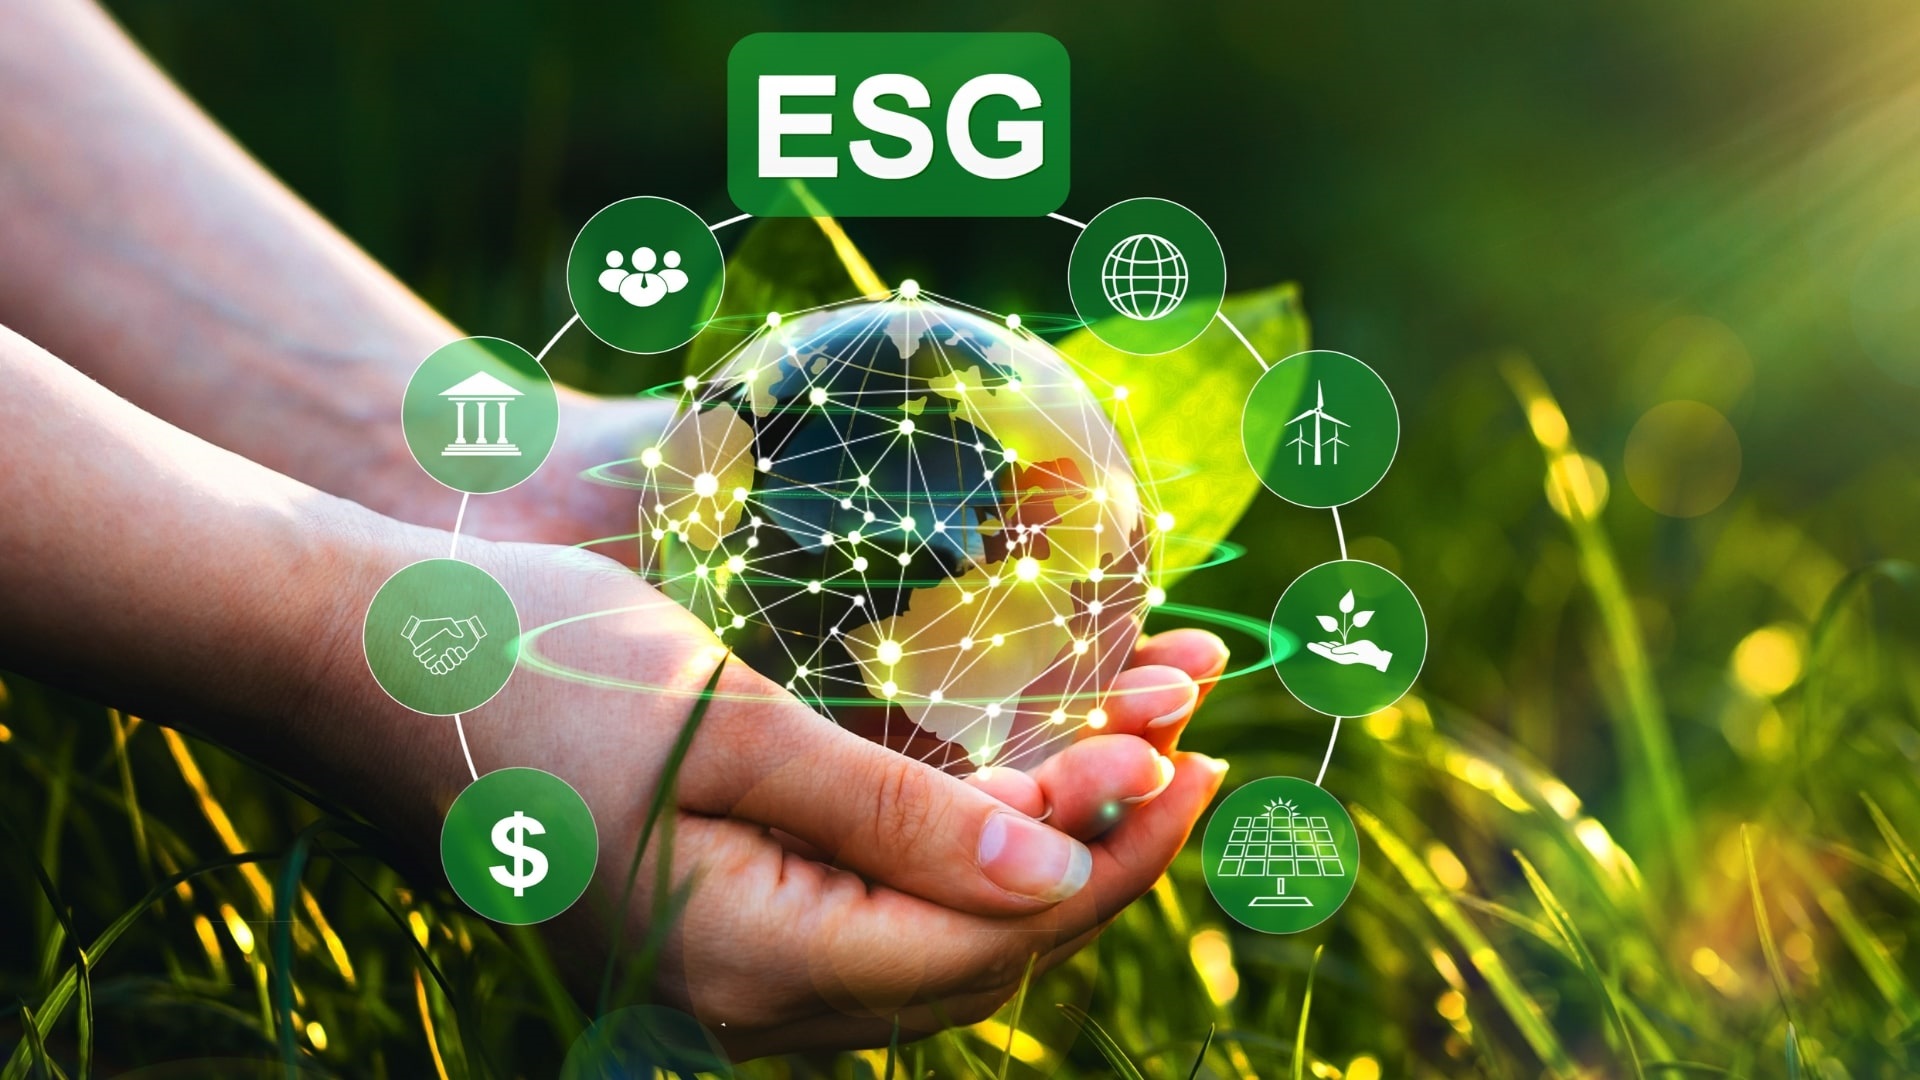 Our new ESG goals